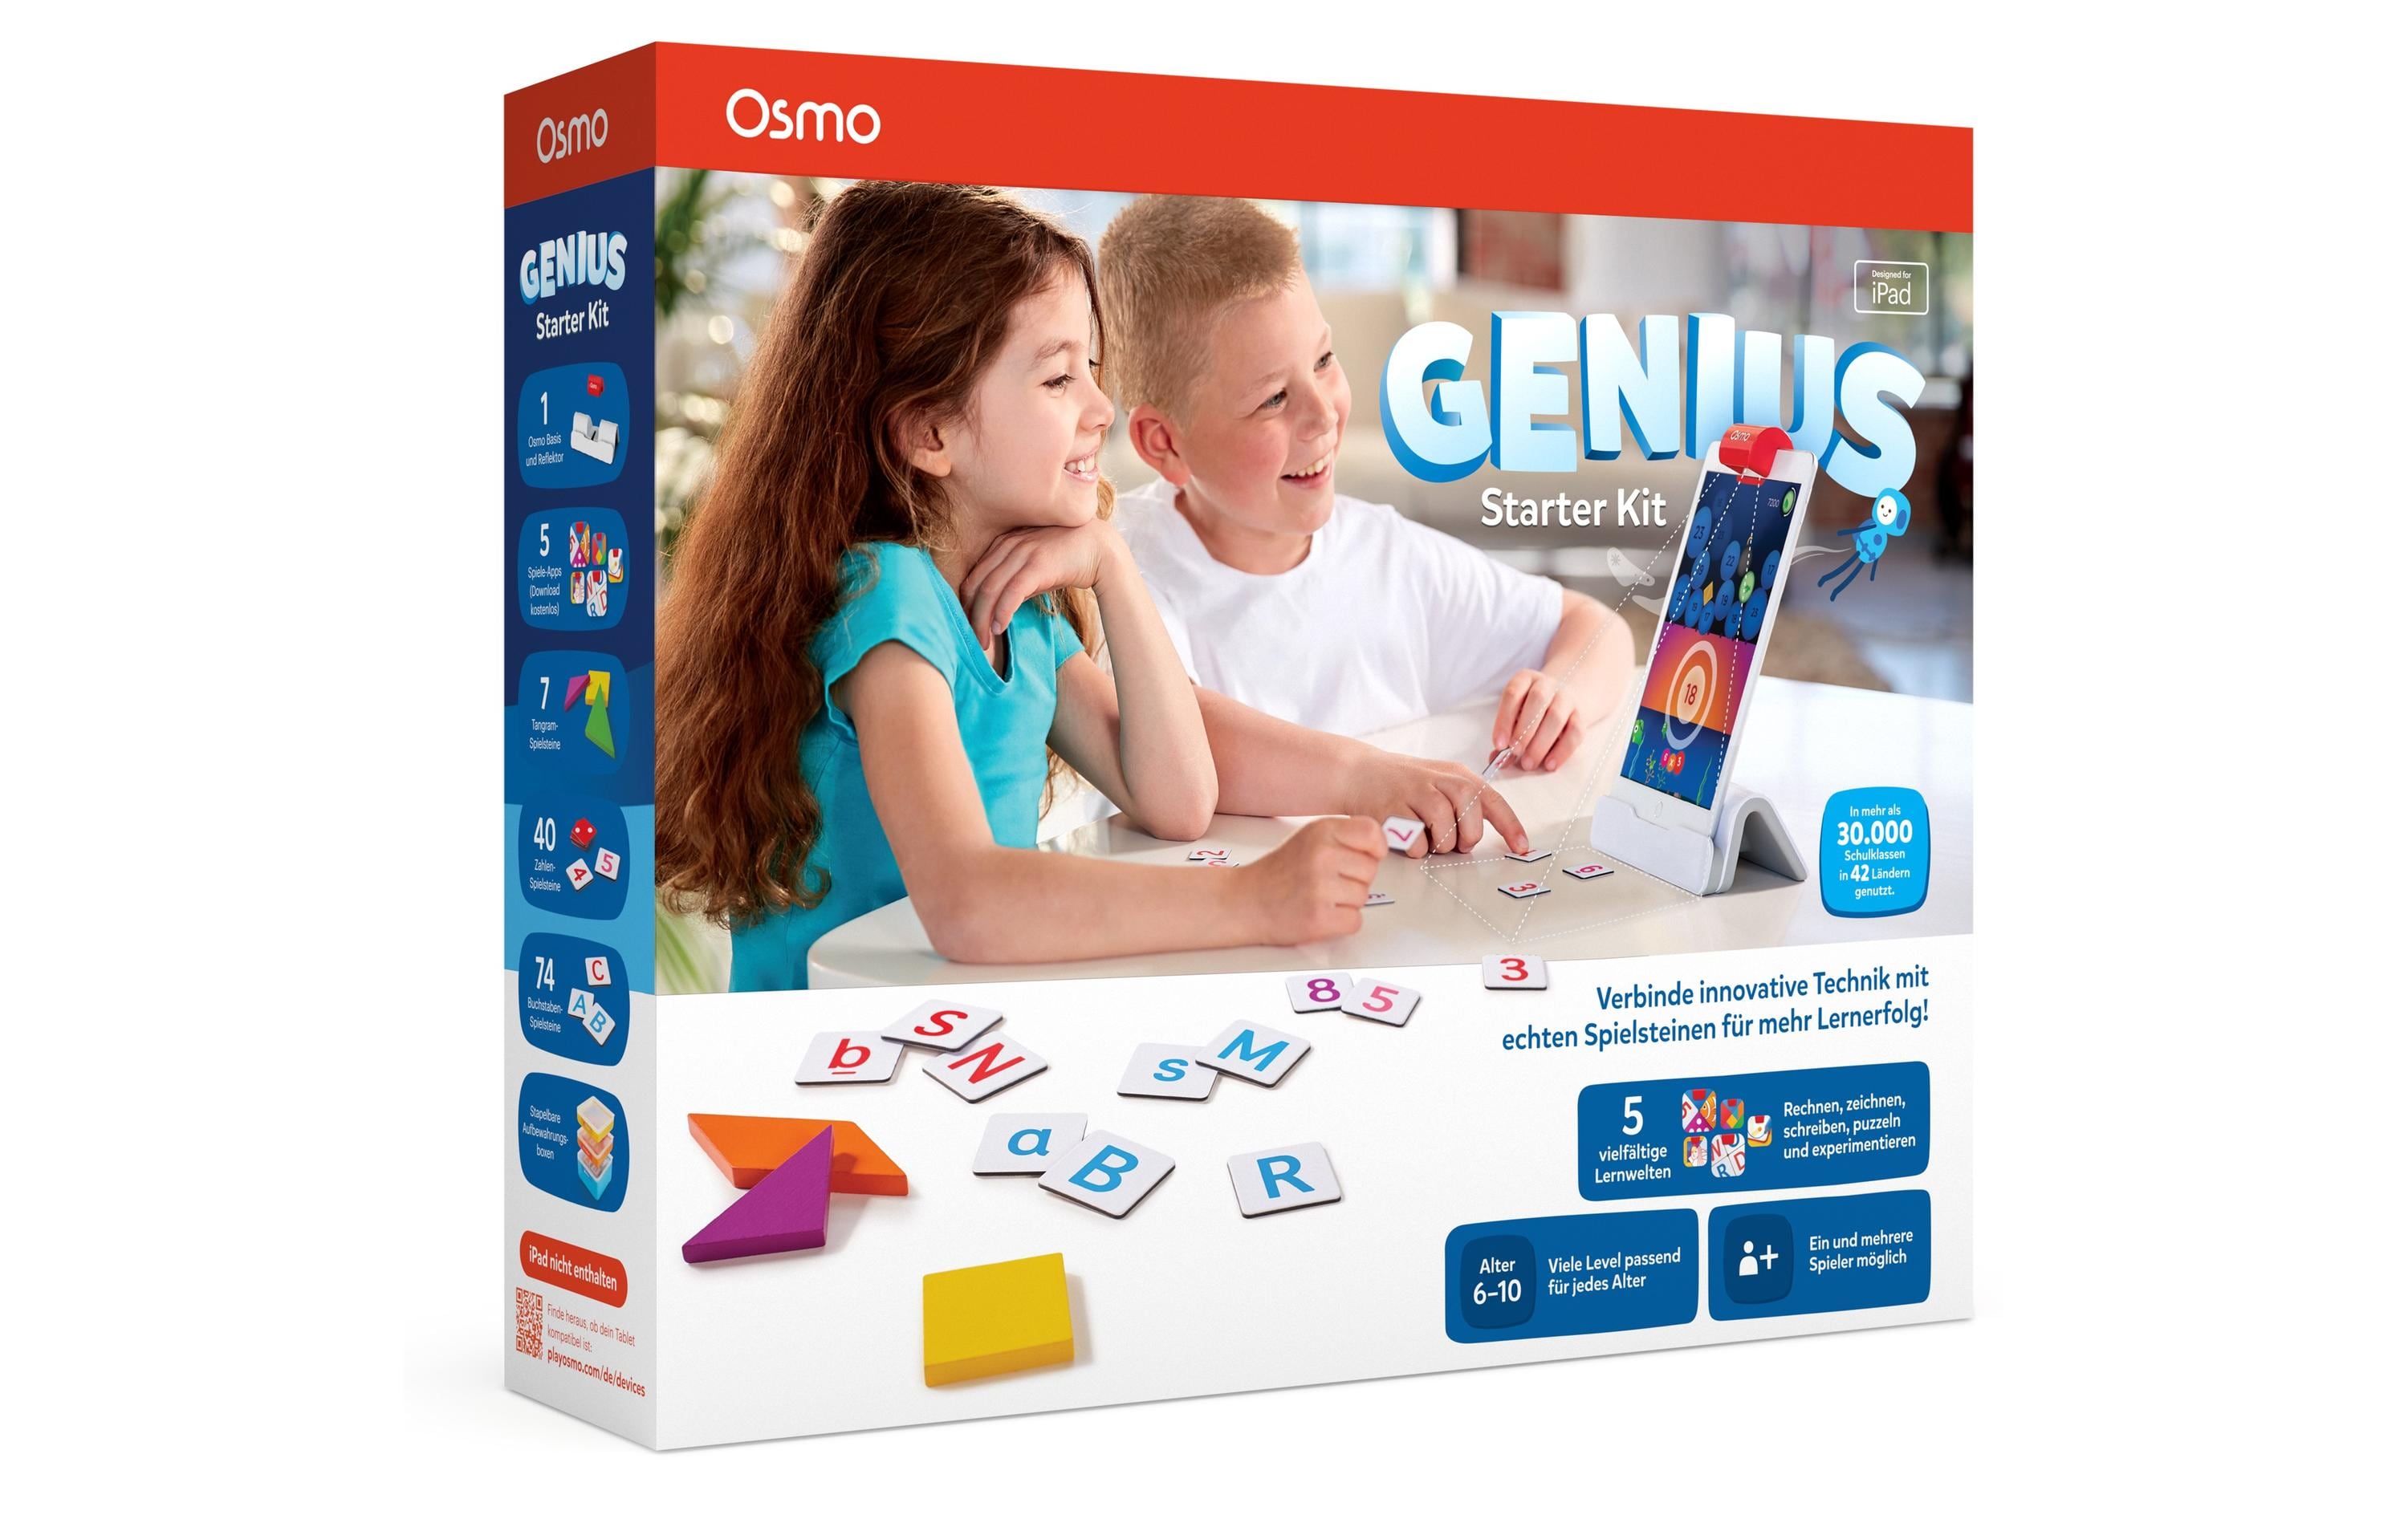 Osmo Osmo Genius Starter Kit für iPad inkl. Basis -DE- Mehrfarbig